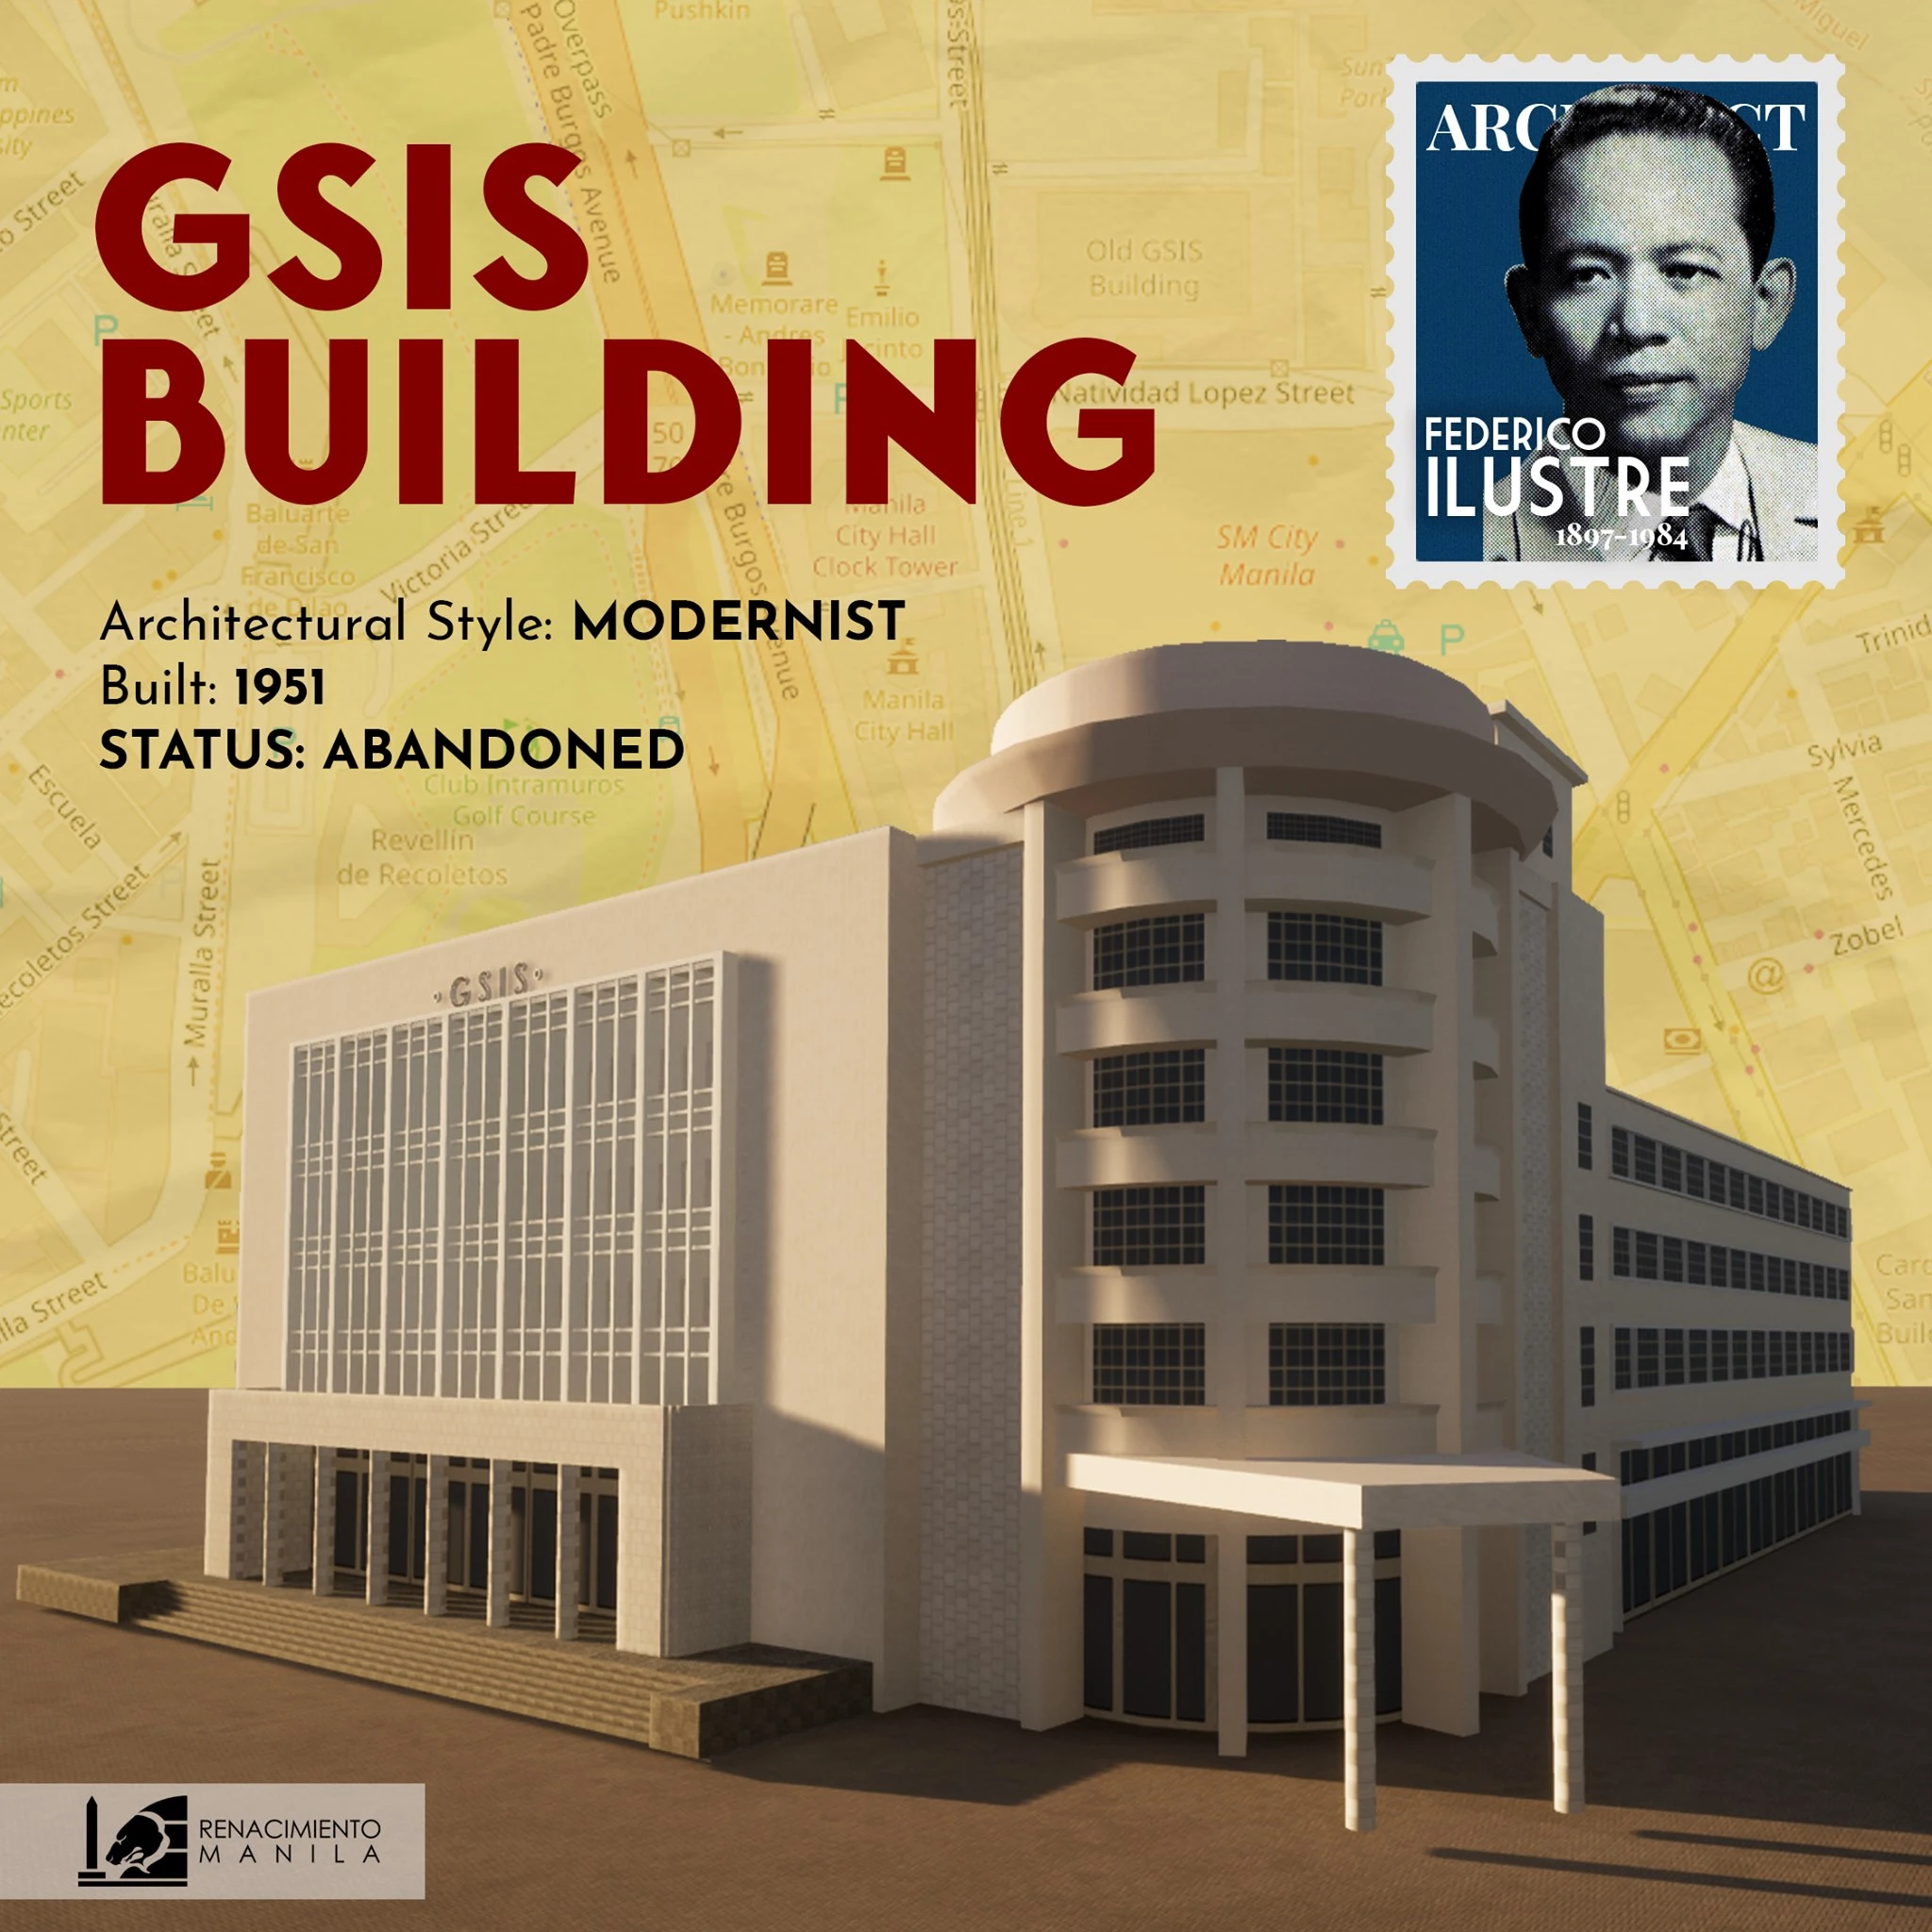 GSIS Building - Federico Ilustre (1912-1989)